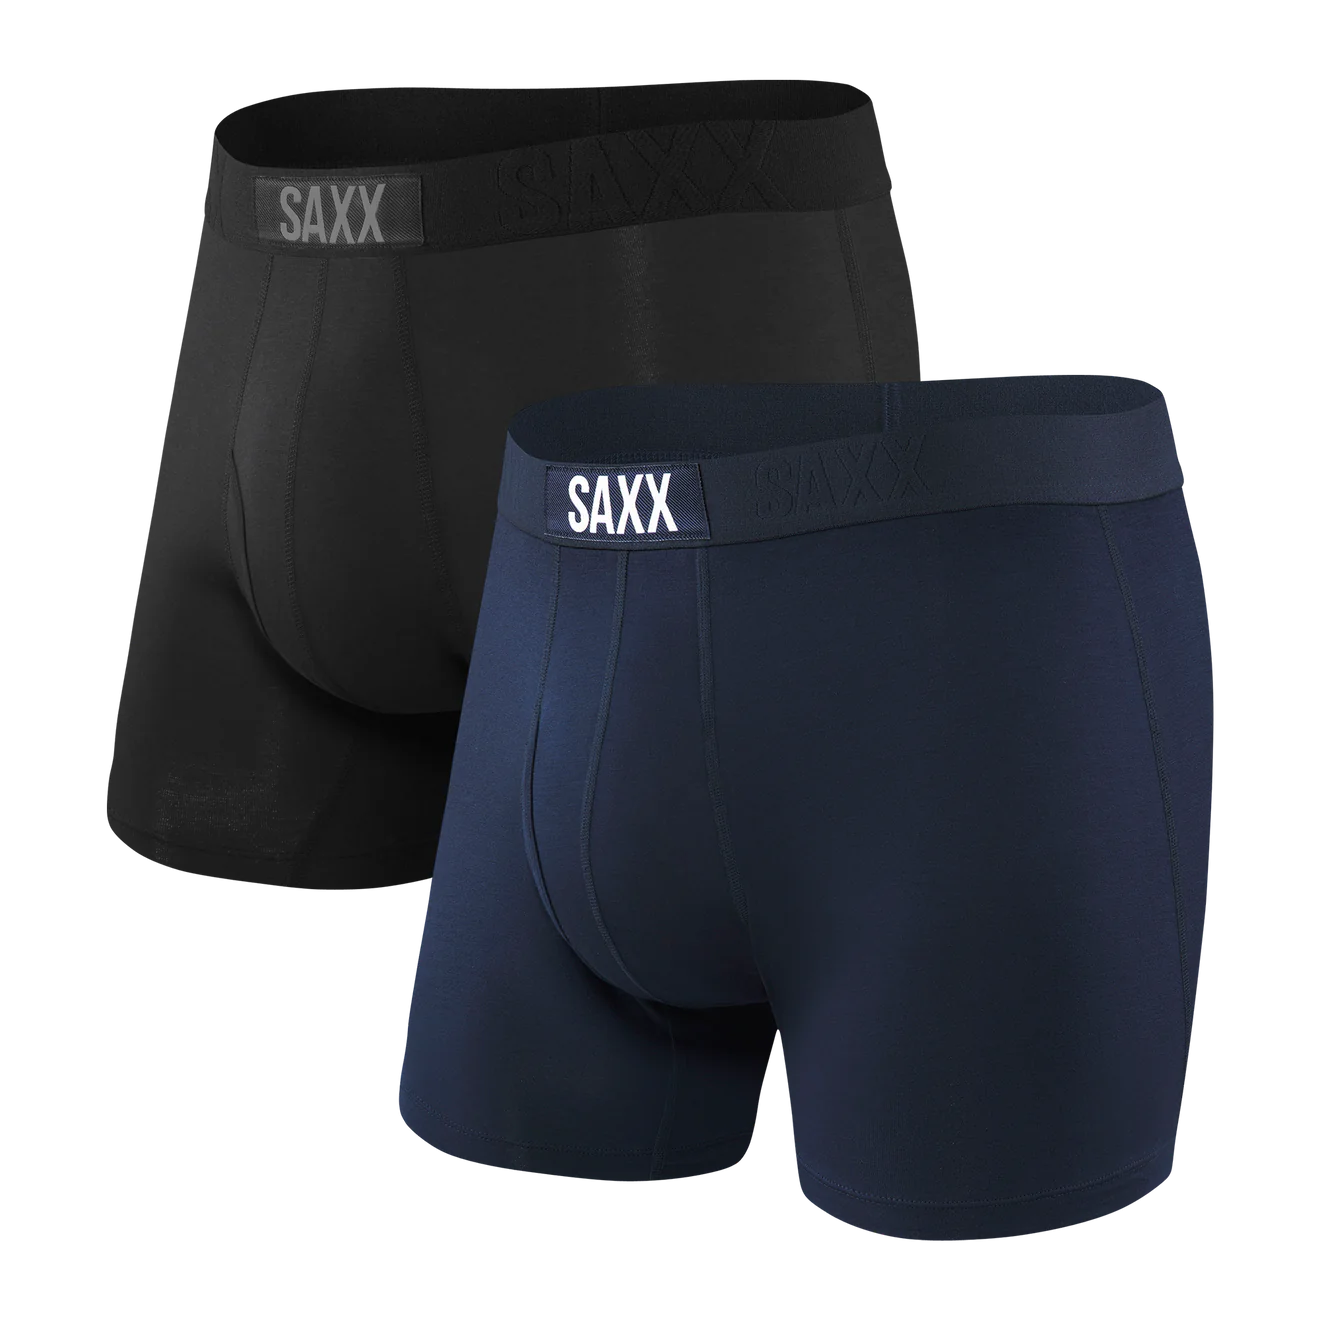 'SAXX Ultra 2-Pack Boxer Briefs - Black/Navy' in 'Black/Navy' colour